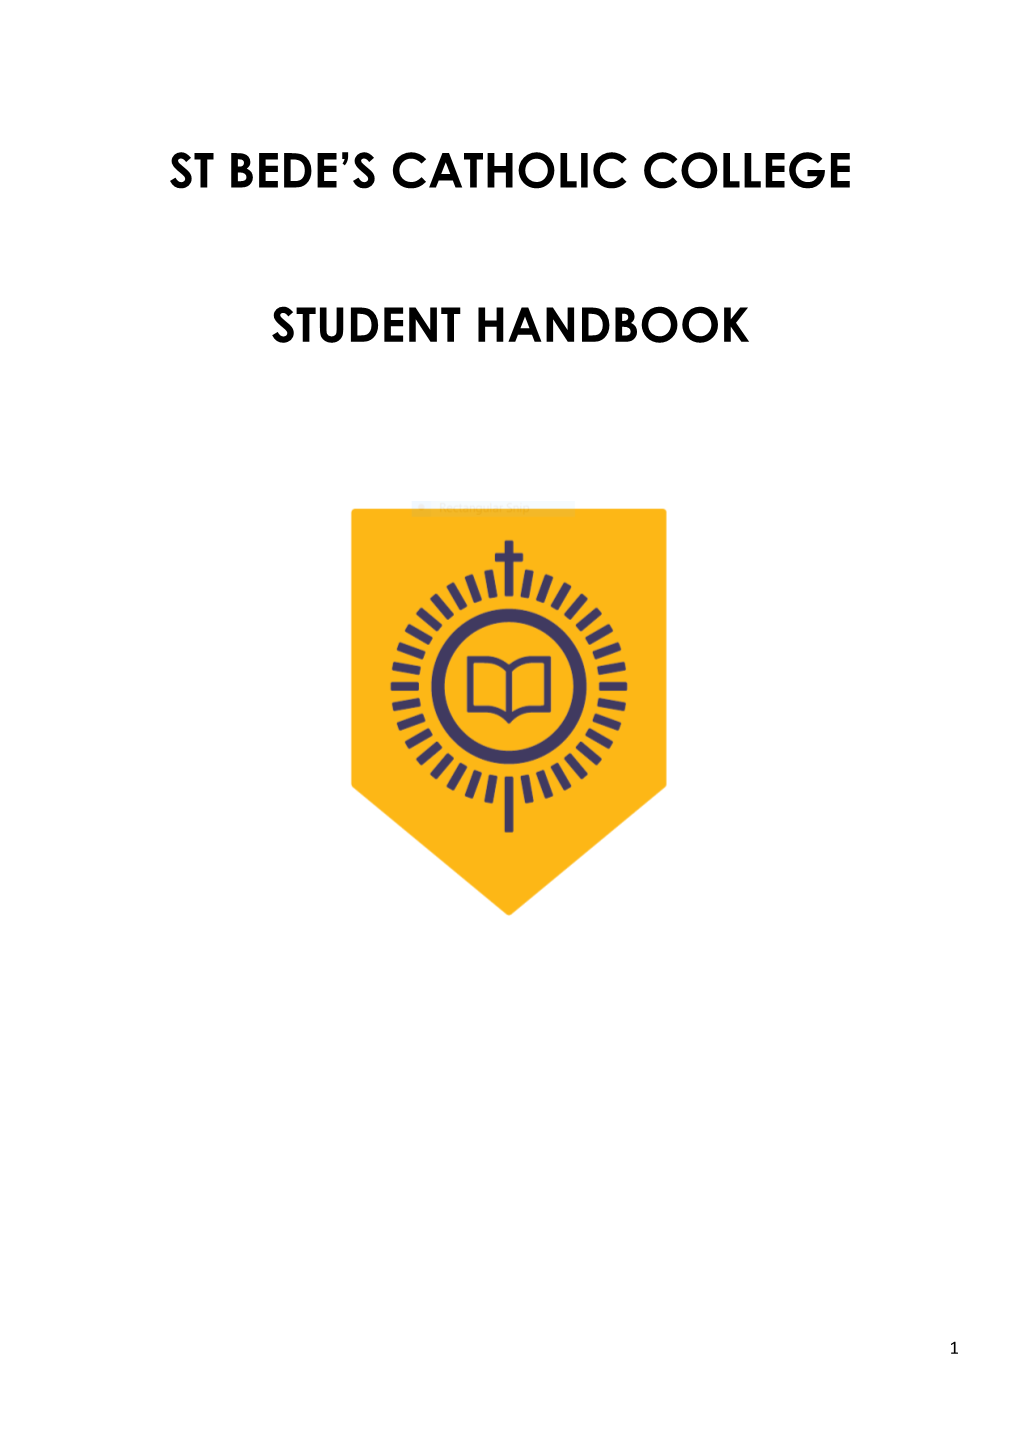 St Bede's Catholic College Student Handbook